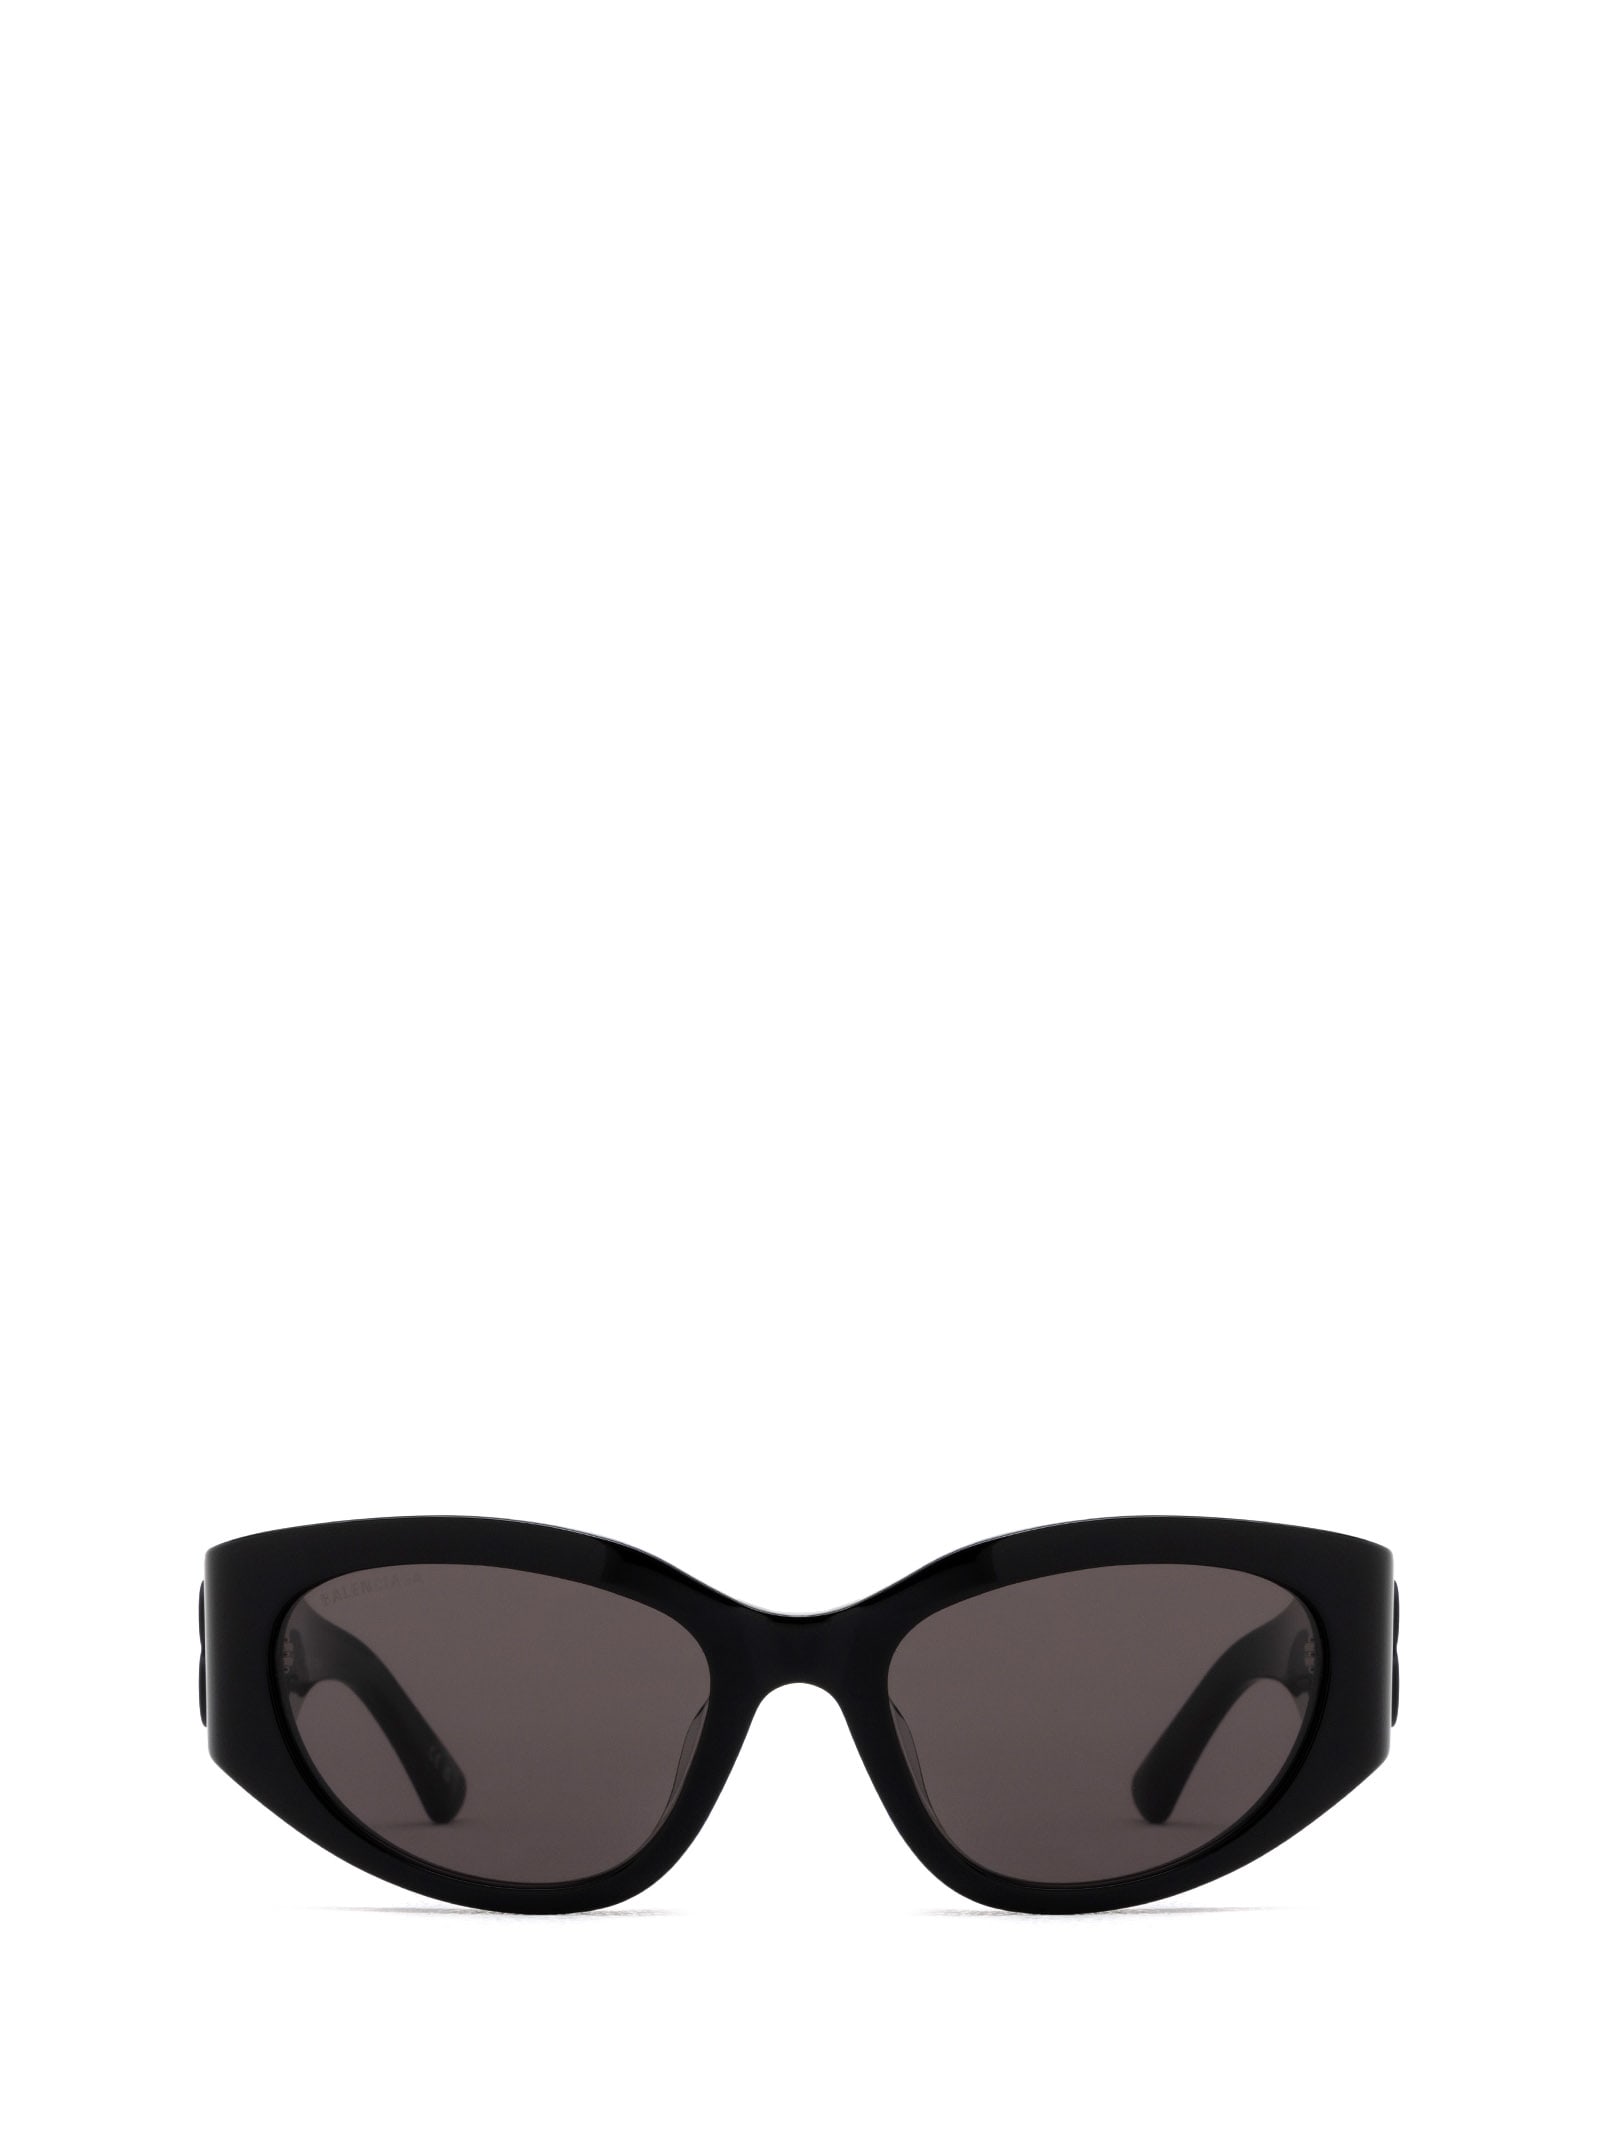 Bb0324 - Black Sunglasses